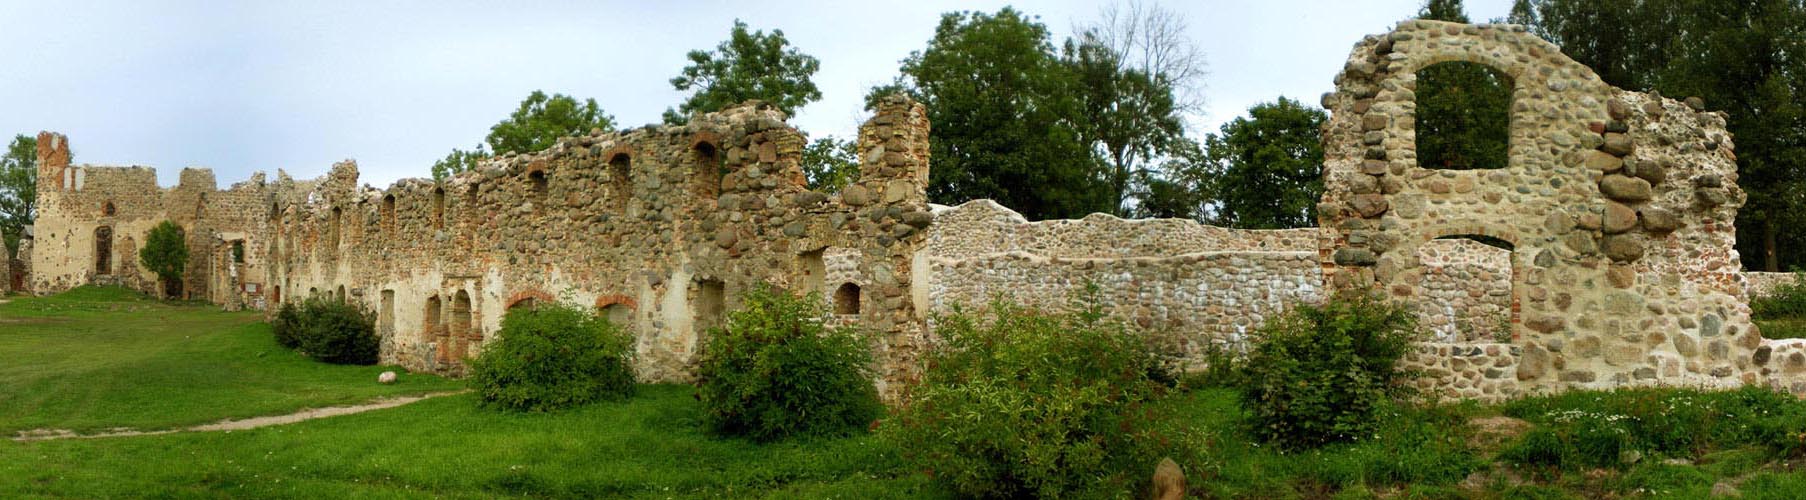 Развалины замка в Добеле